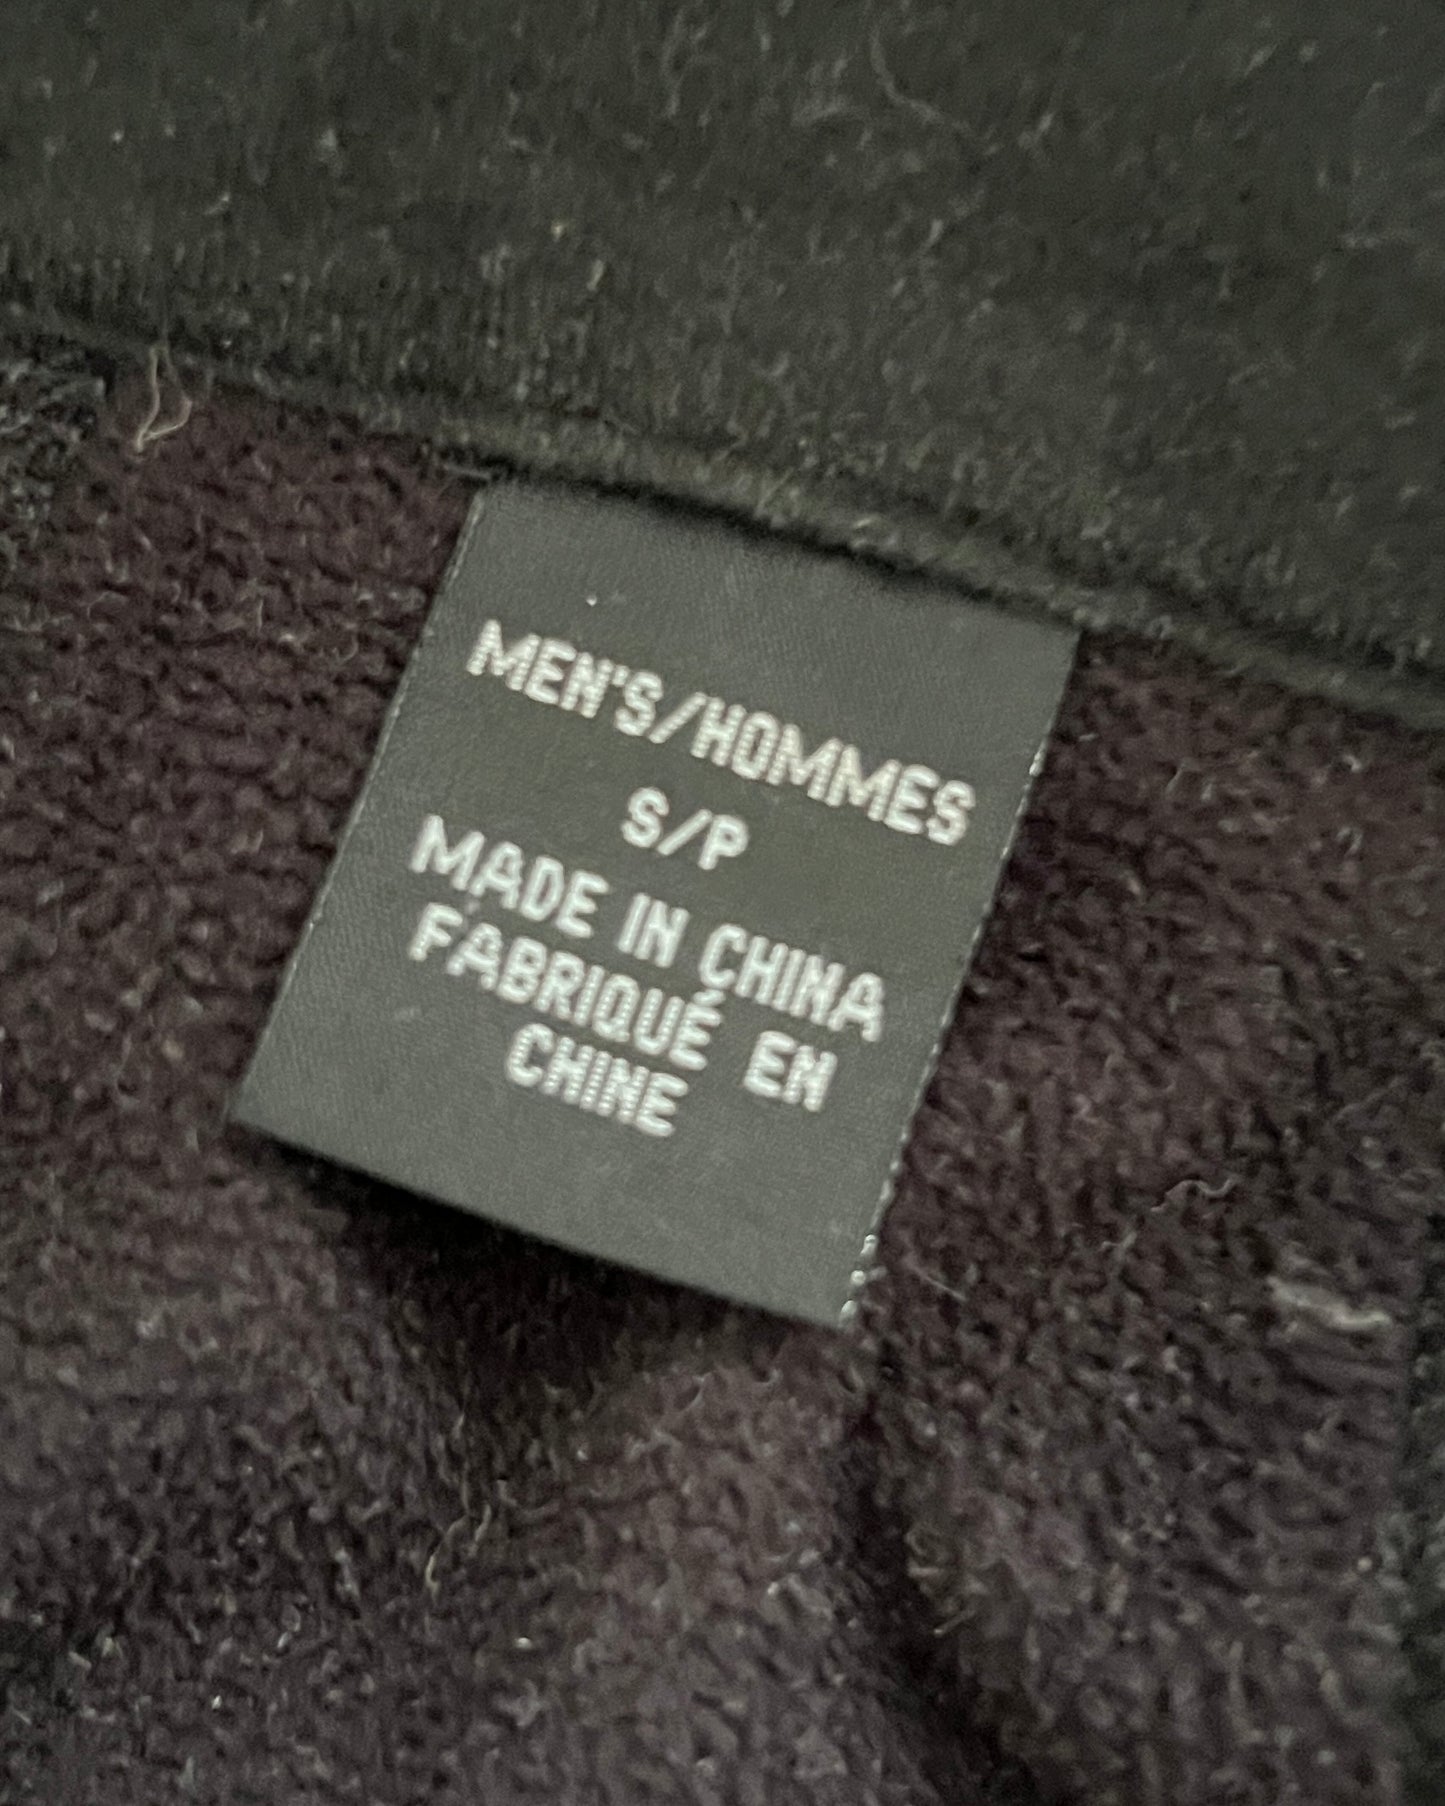 Mountain Hardwear Exposed Taped Seam Technical Conduit Jacket Burgundy - Size S